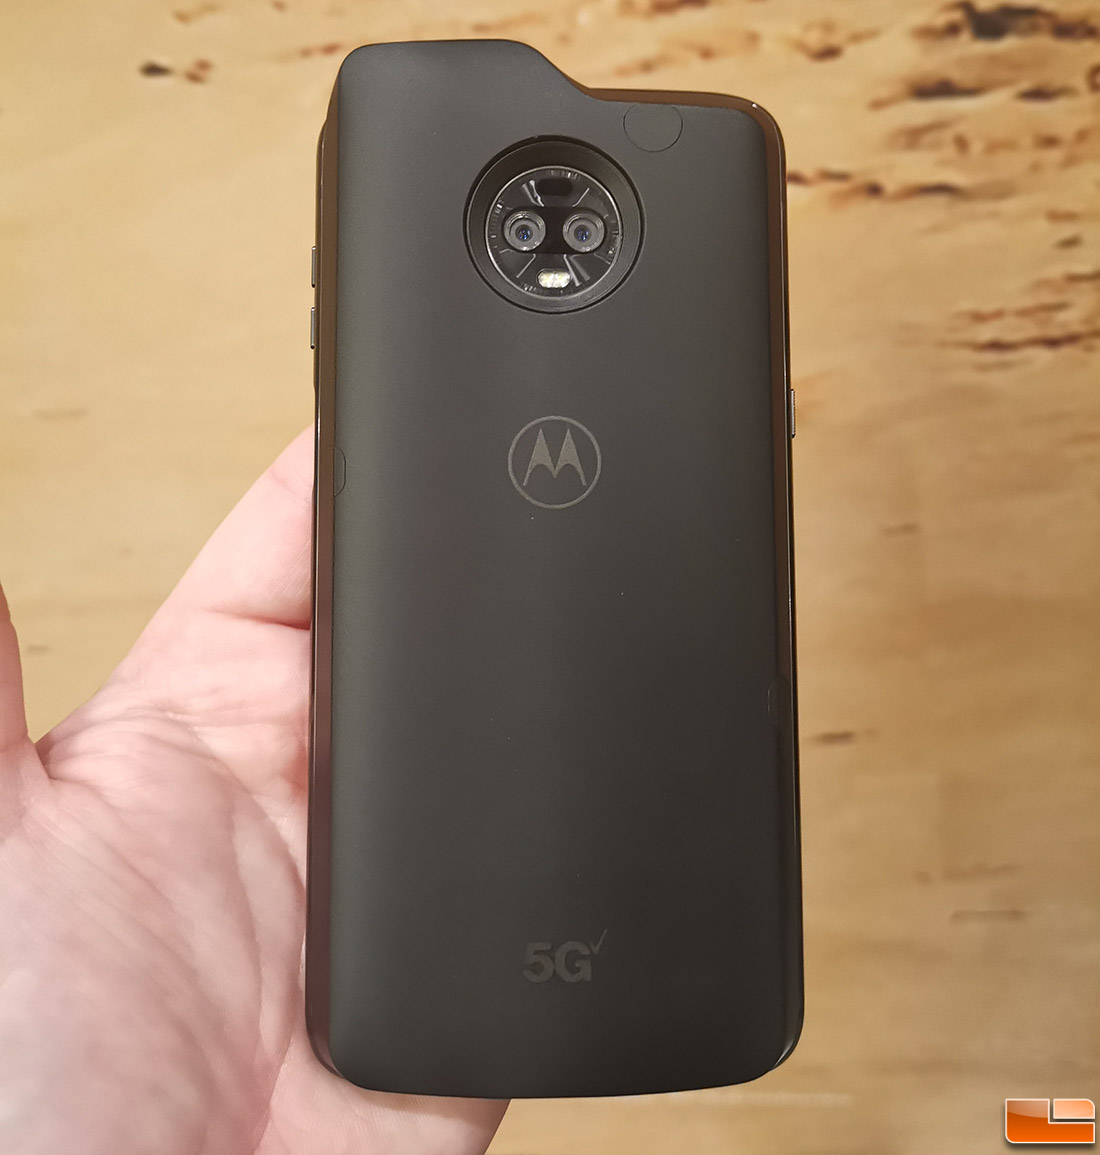 5G Moto Mod Running On Motorola Moto Z3 At Qualcomm Snapdragon Summit ...